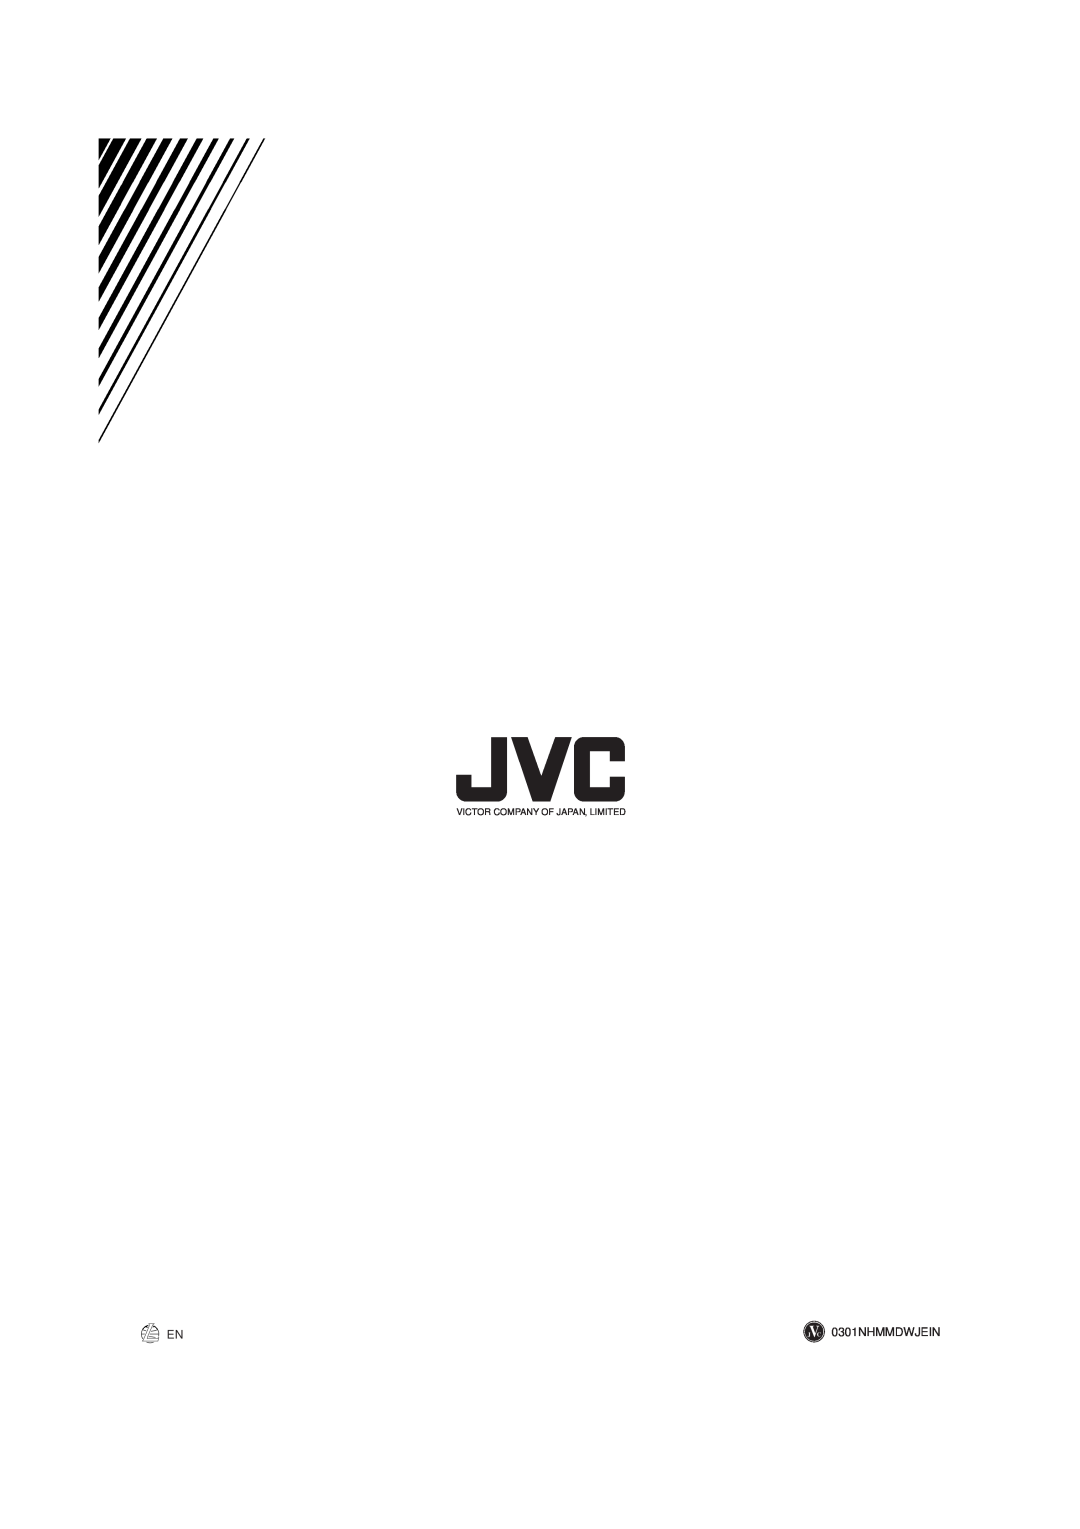 JVC RX-E100RSL manual 0301NHMMDWJEIN, Victor Company Of Japan, Limited 